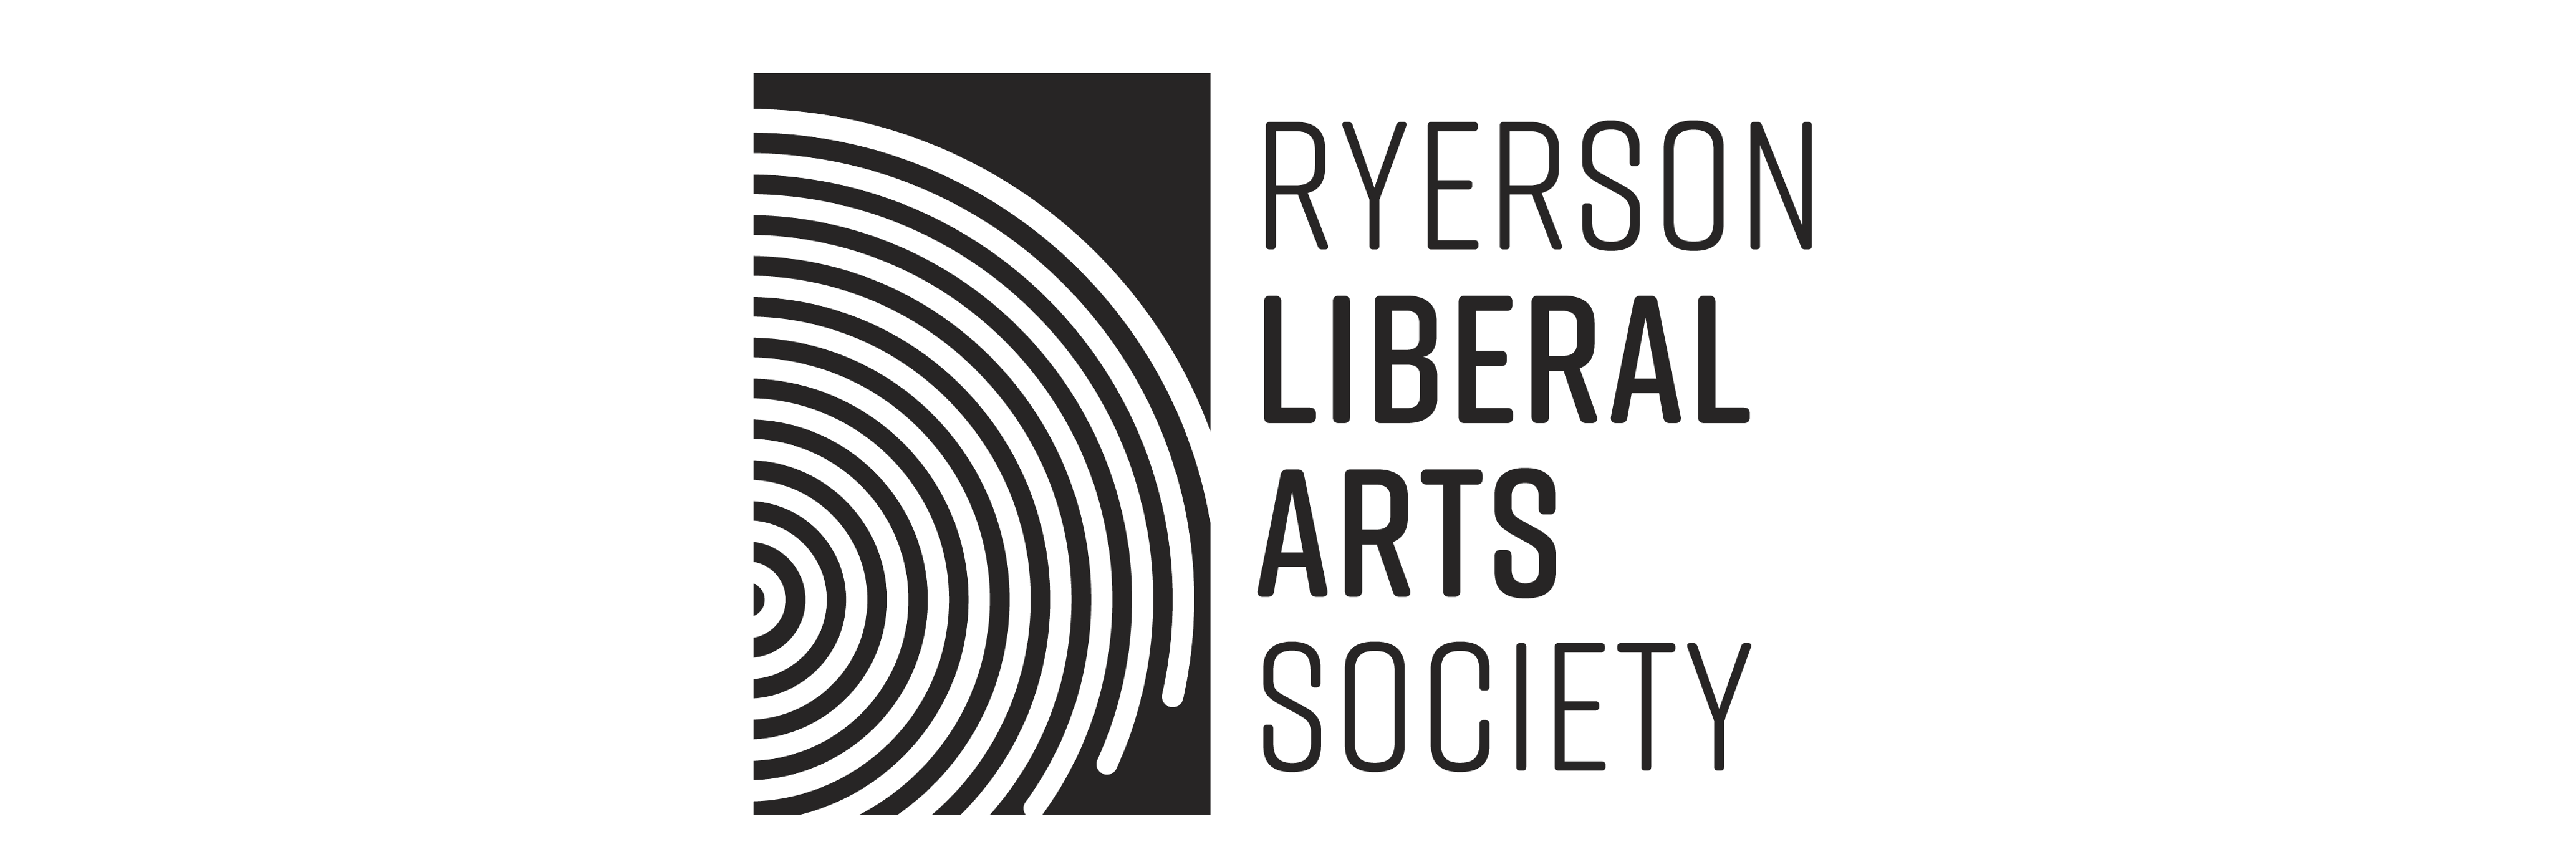 Ryerson Liberal Arts Society Logo